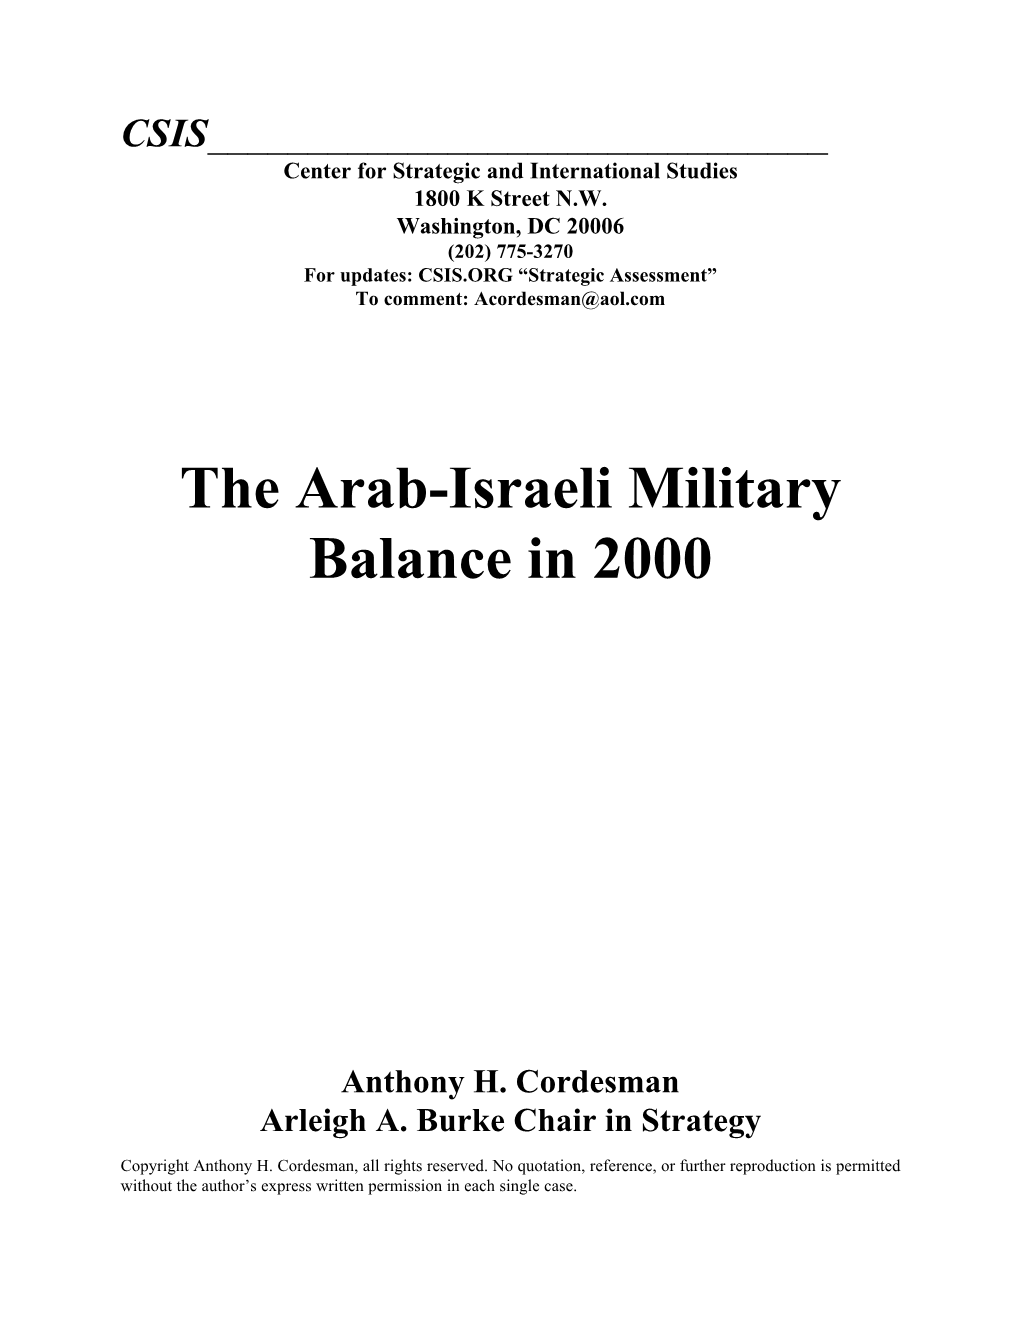 The Arab-Israeli Military Balance in 2000